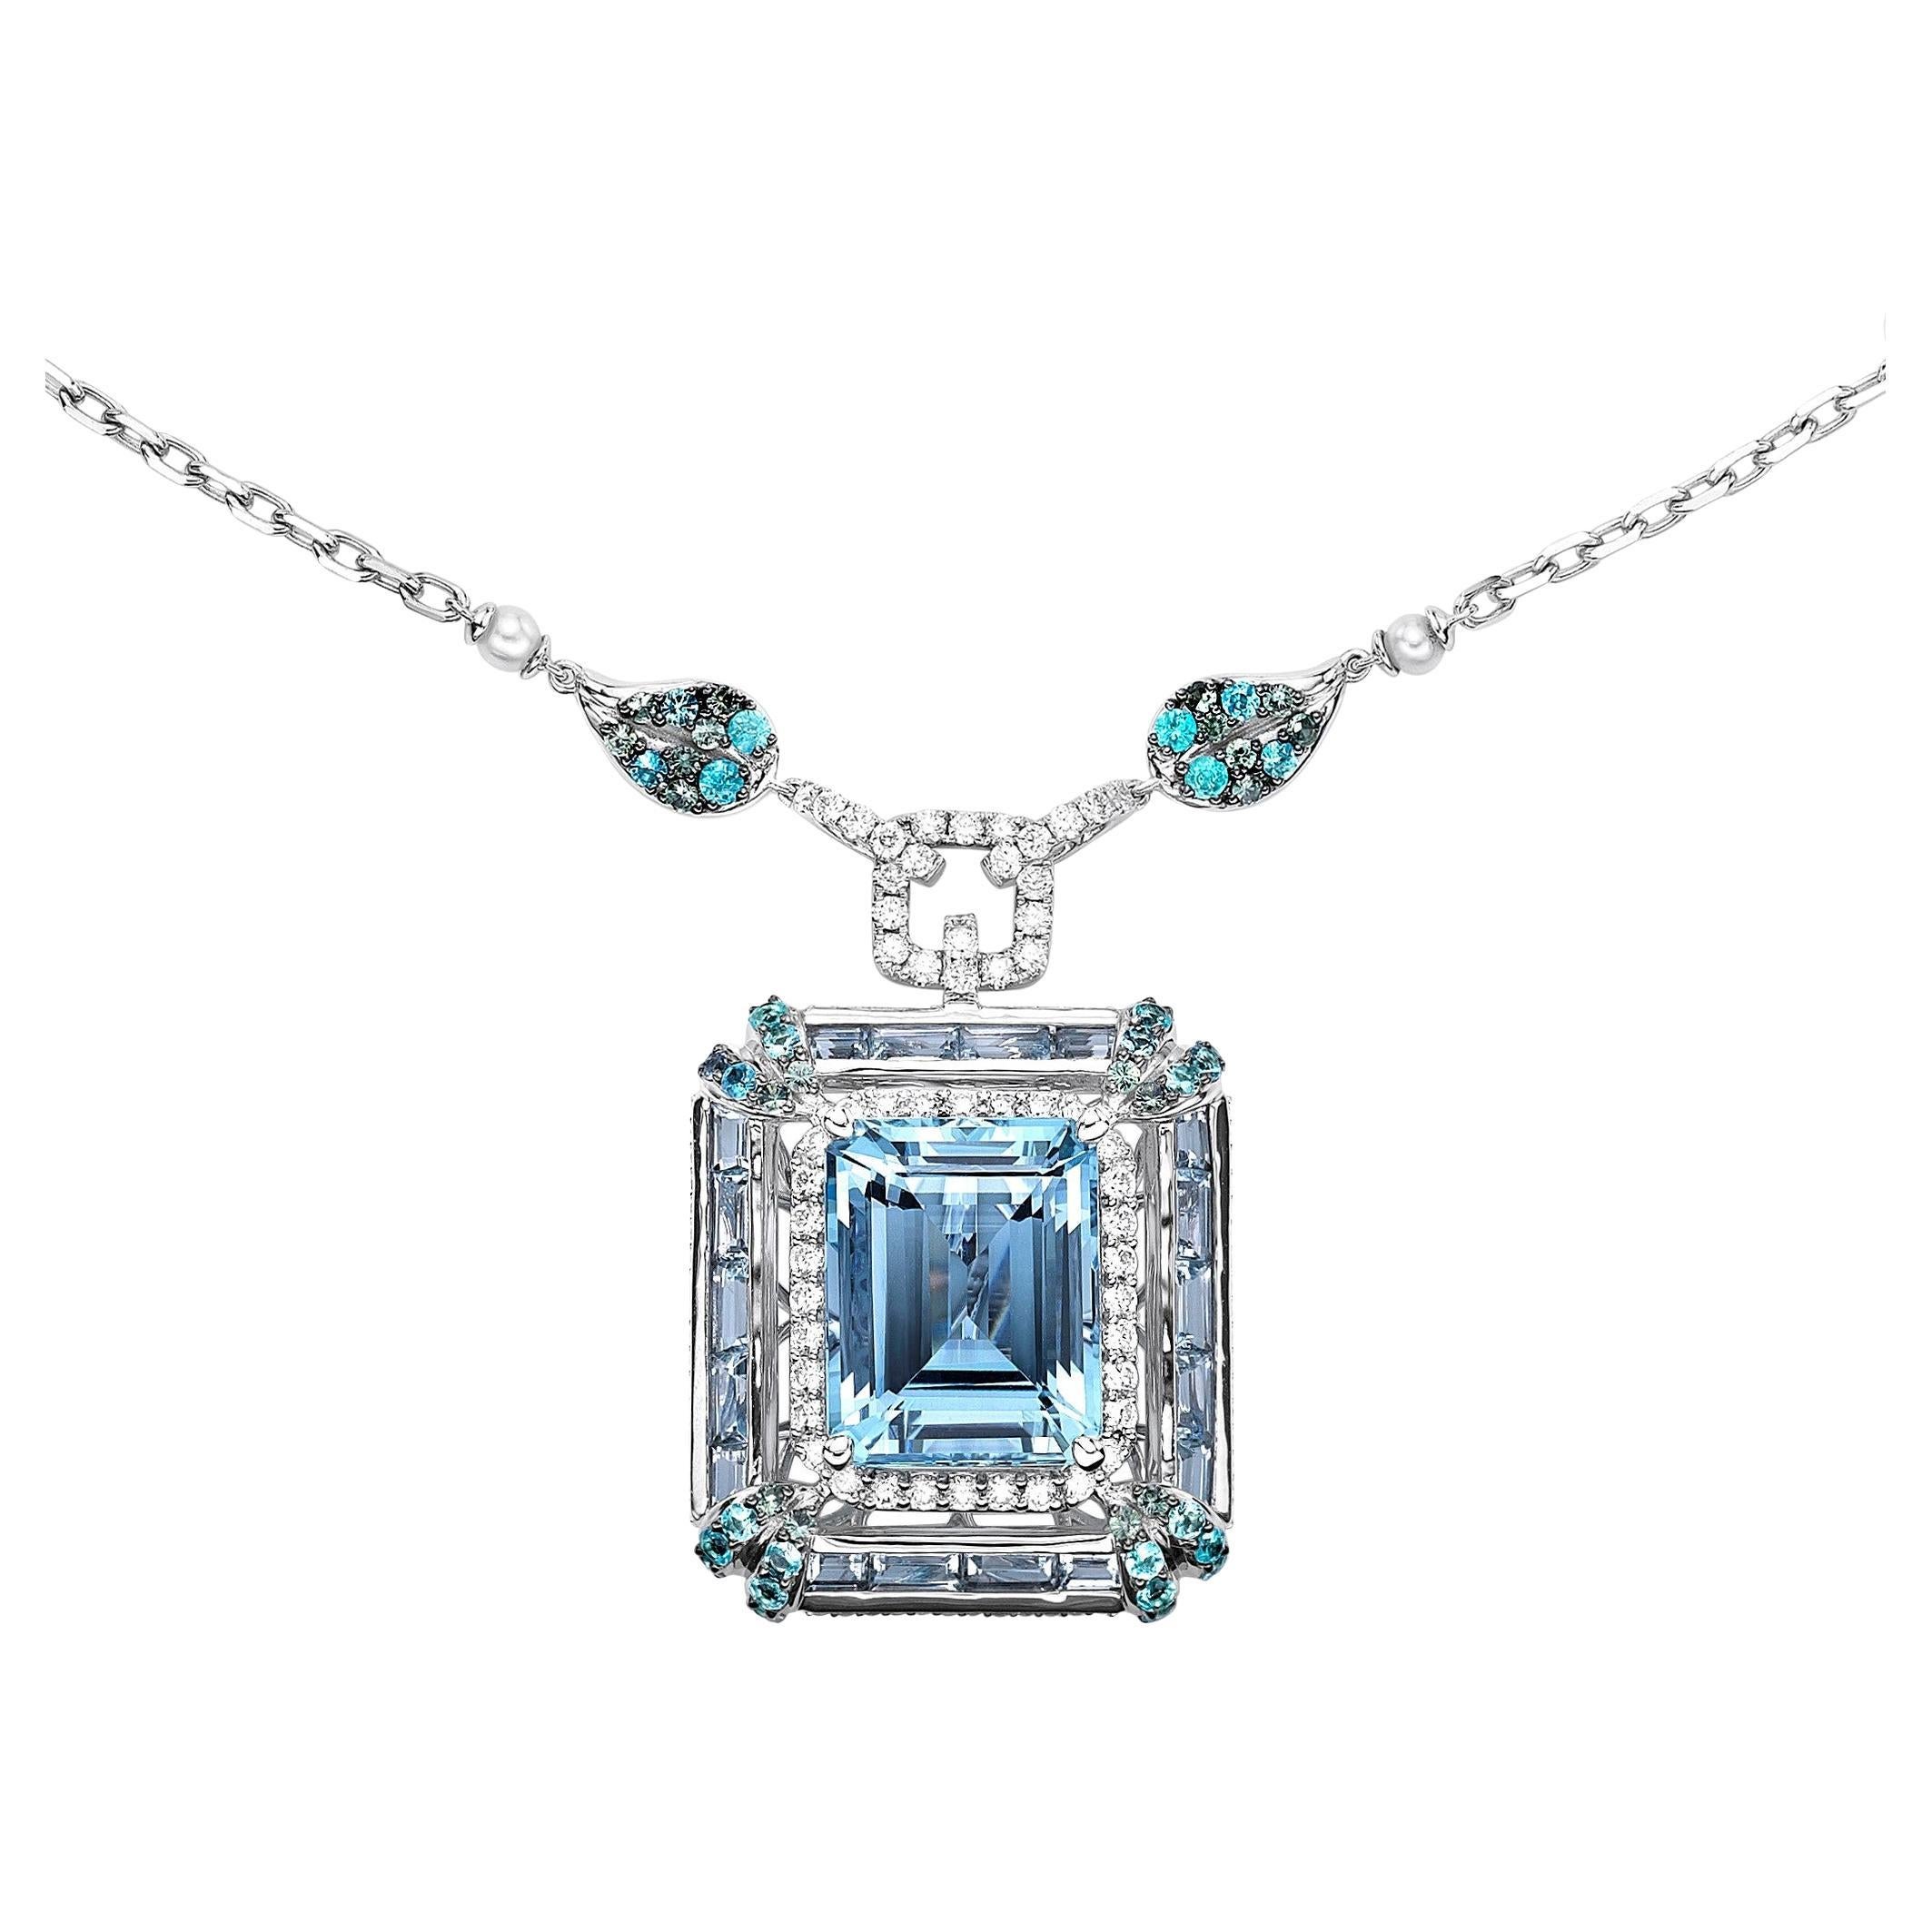 Aquamarine Necklace with Paraiba, Alexandrite, Pearl & Diamond